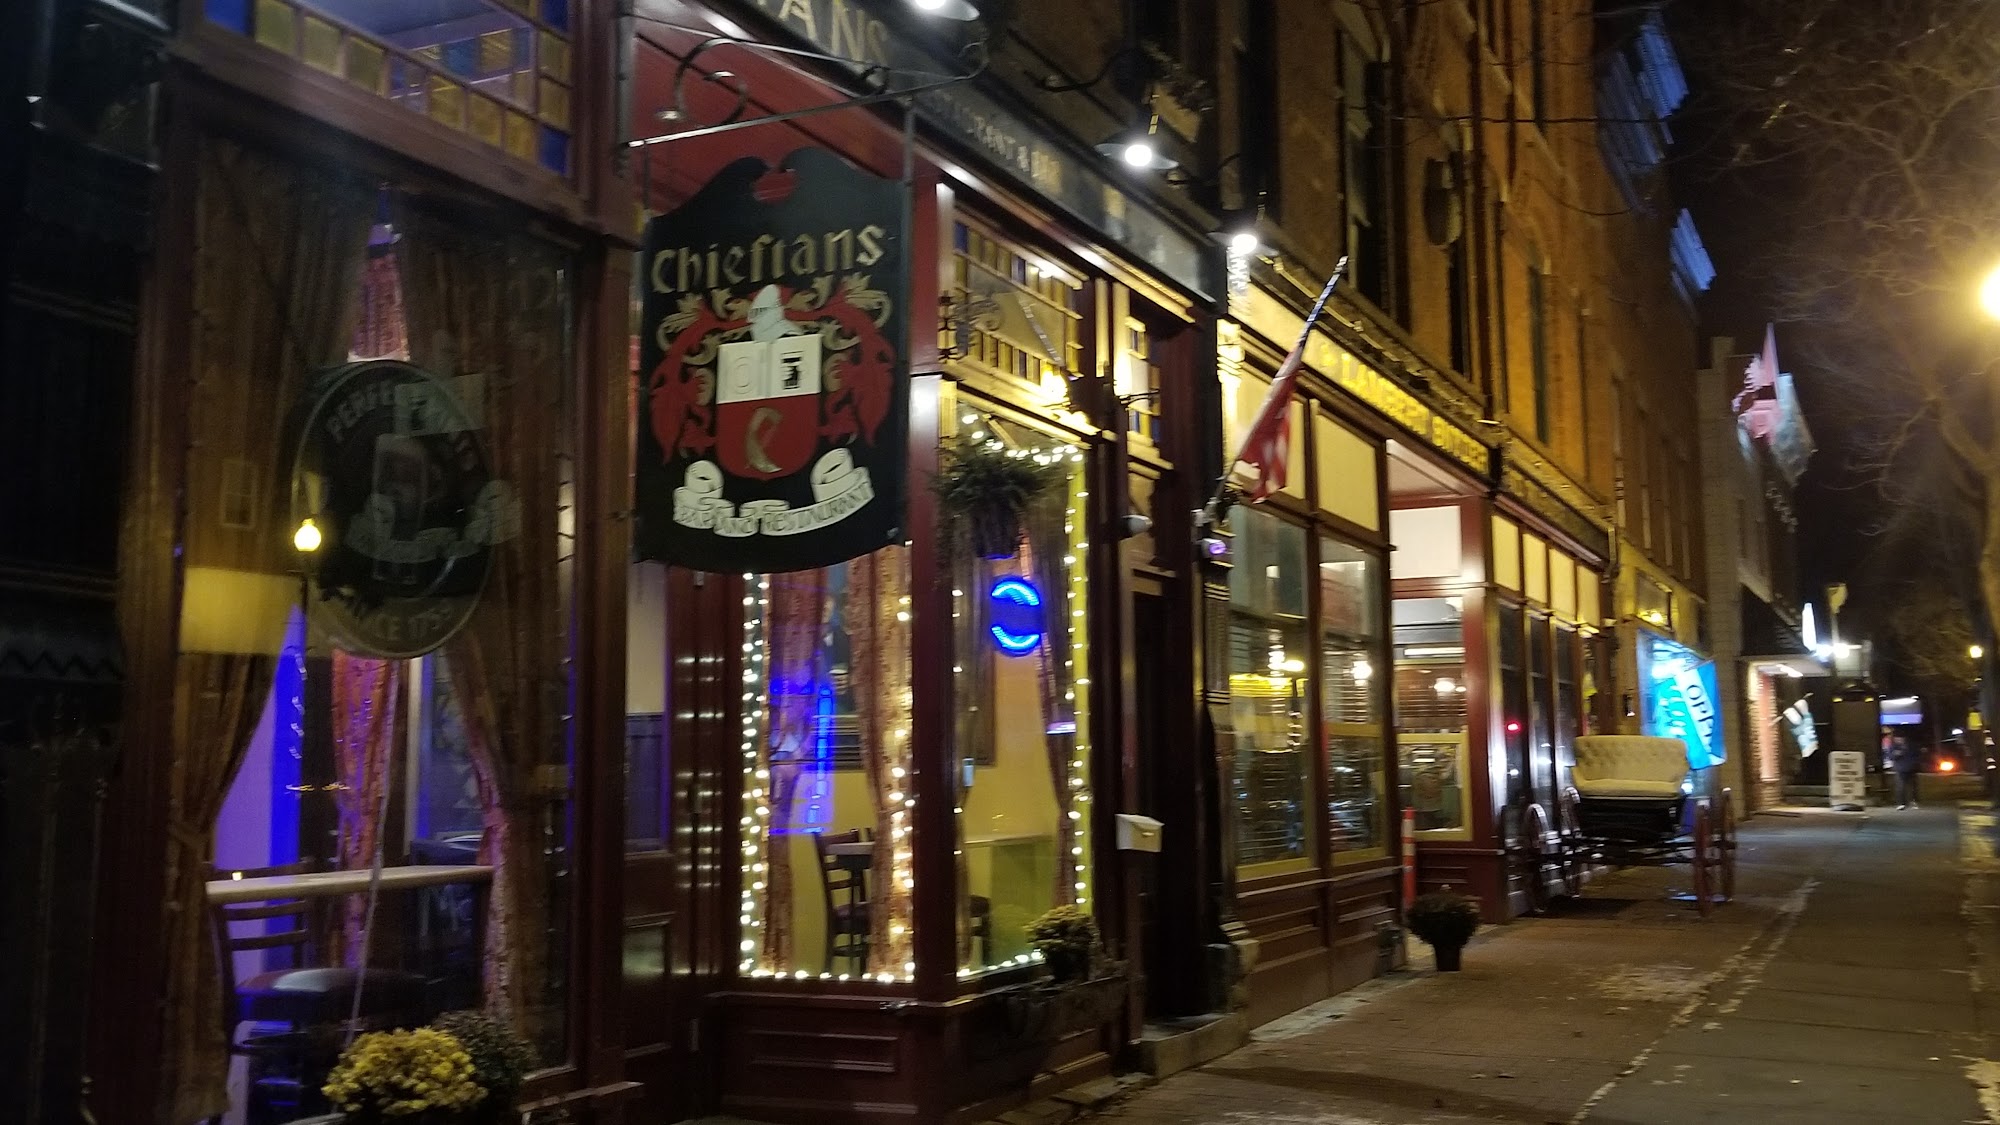 Chieftans Restaurant & Bar